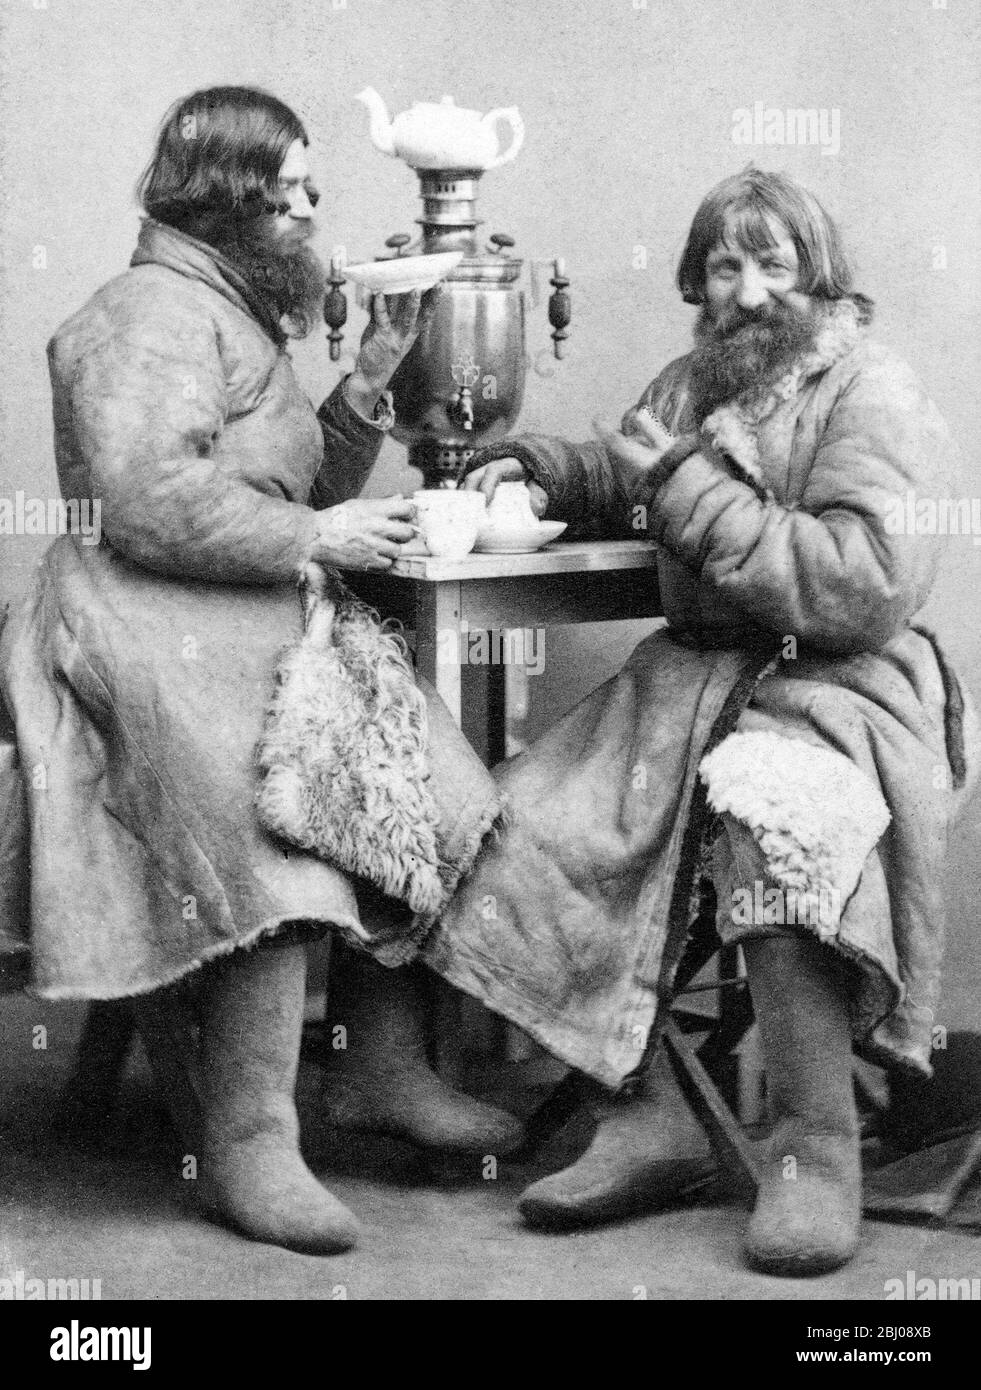 Russian tea from the samovar - carte-de-visite photograph, c1860. Stock Photo